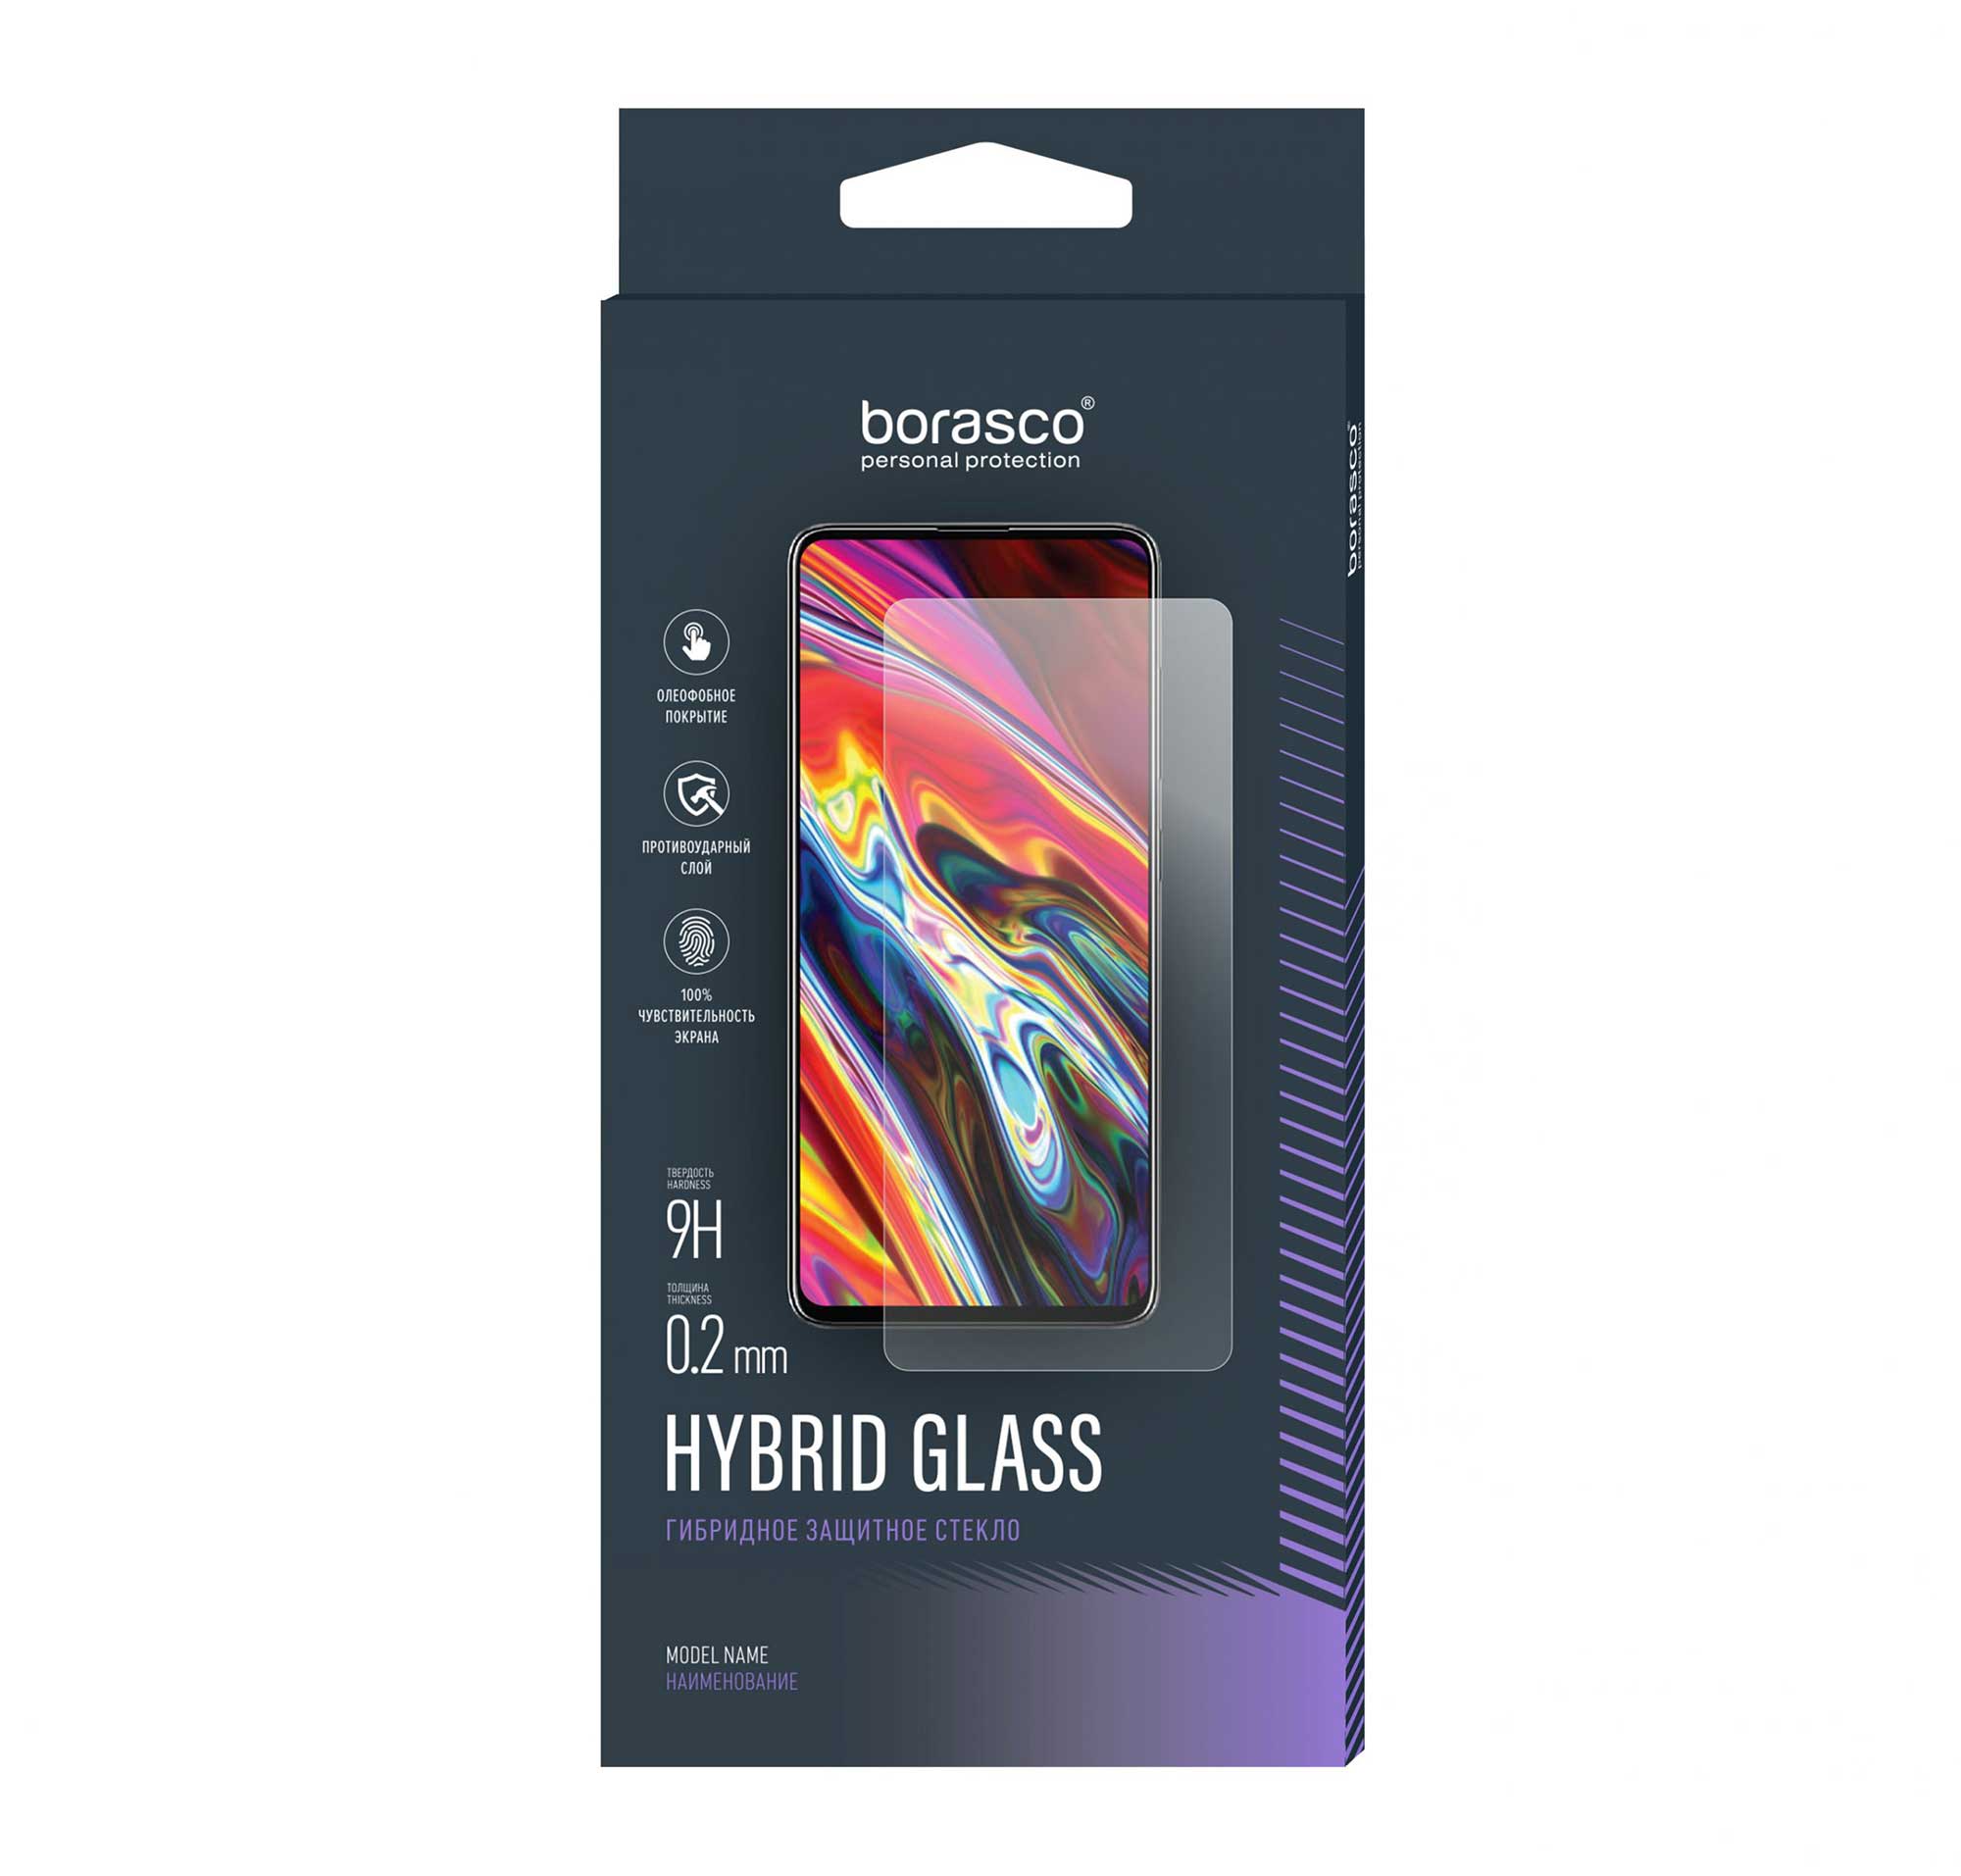 Защитное стекло Hybrid Glass для OPPO Reno 5 Lite стекло защитное krutoff для oppo reno z 22168